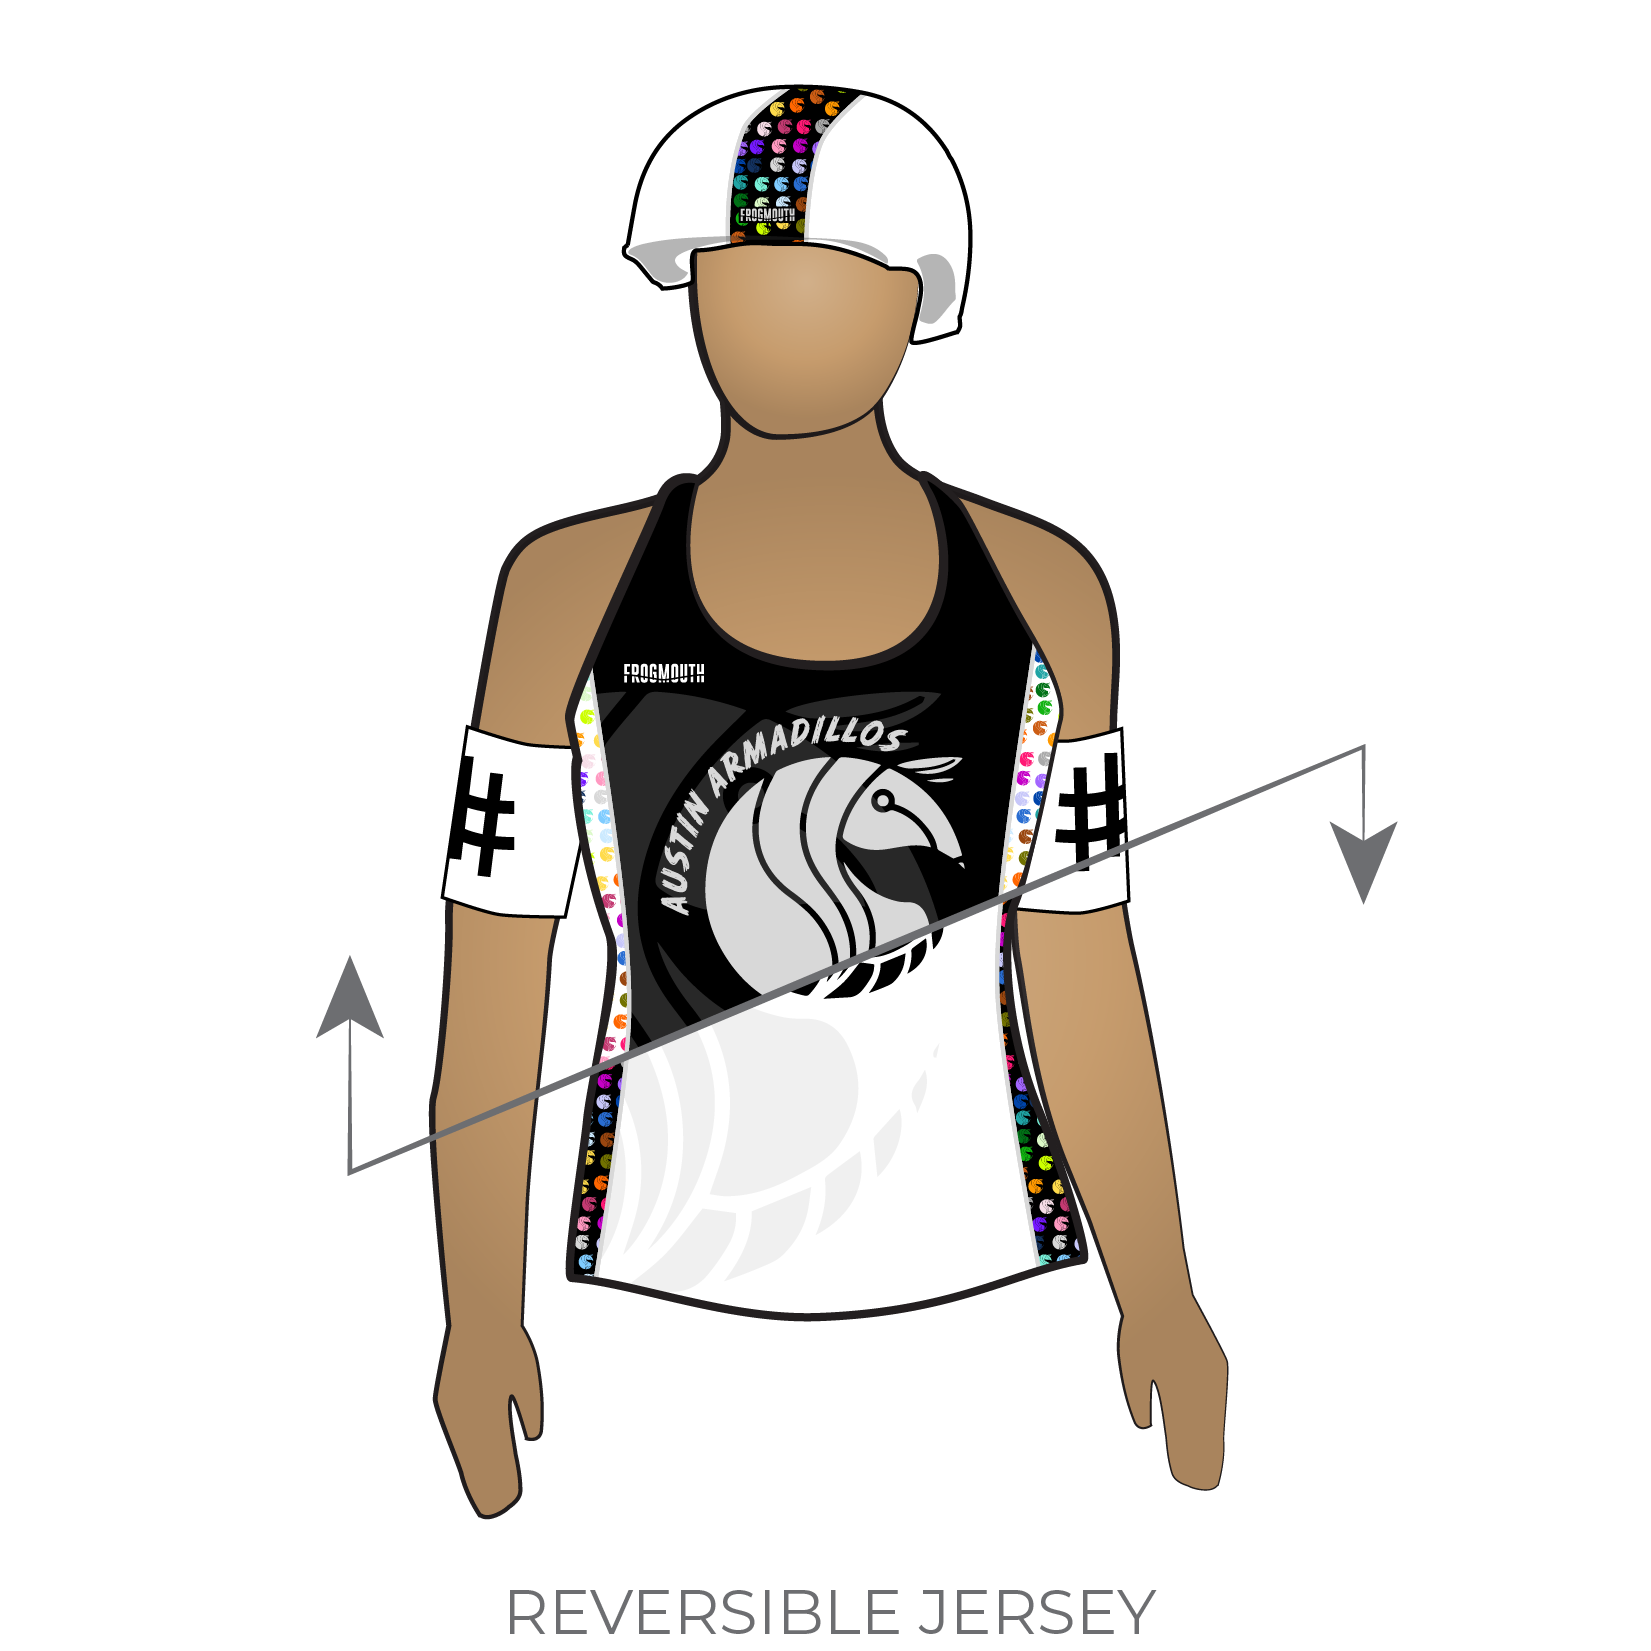 Austin Armadillos: Reversible Uniform Jersey (BlackR/WhiteR) – Frogmouth